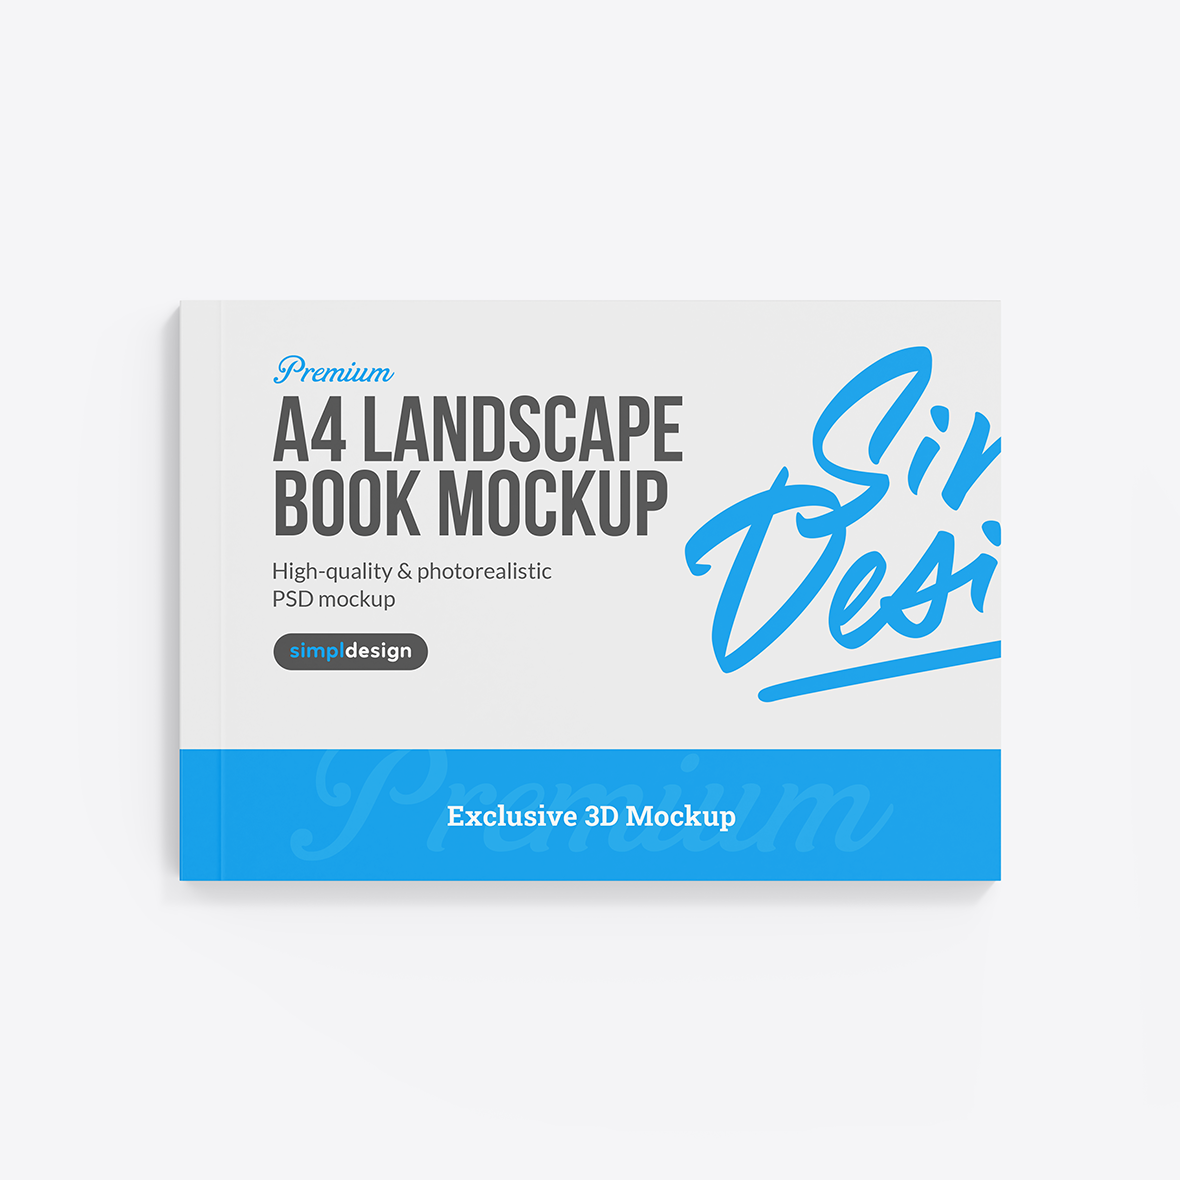 A4 Landscape Book Mockup